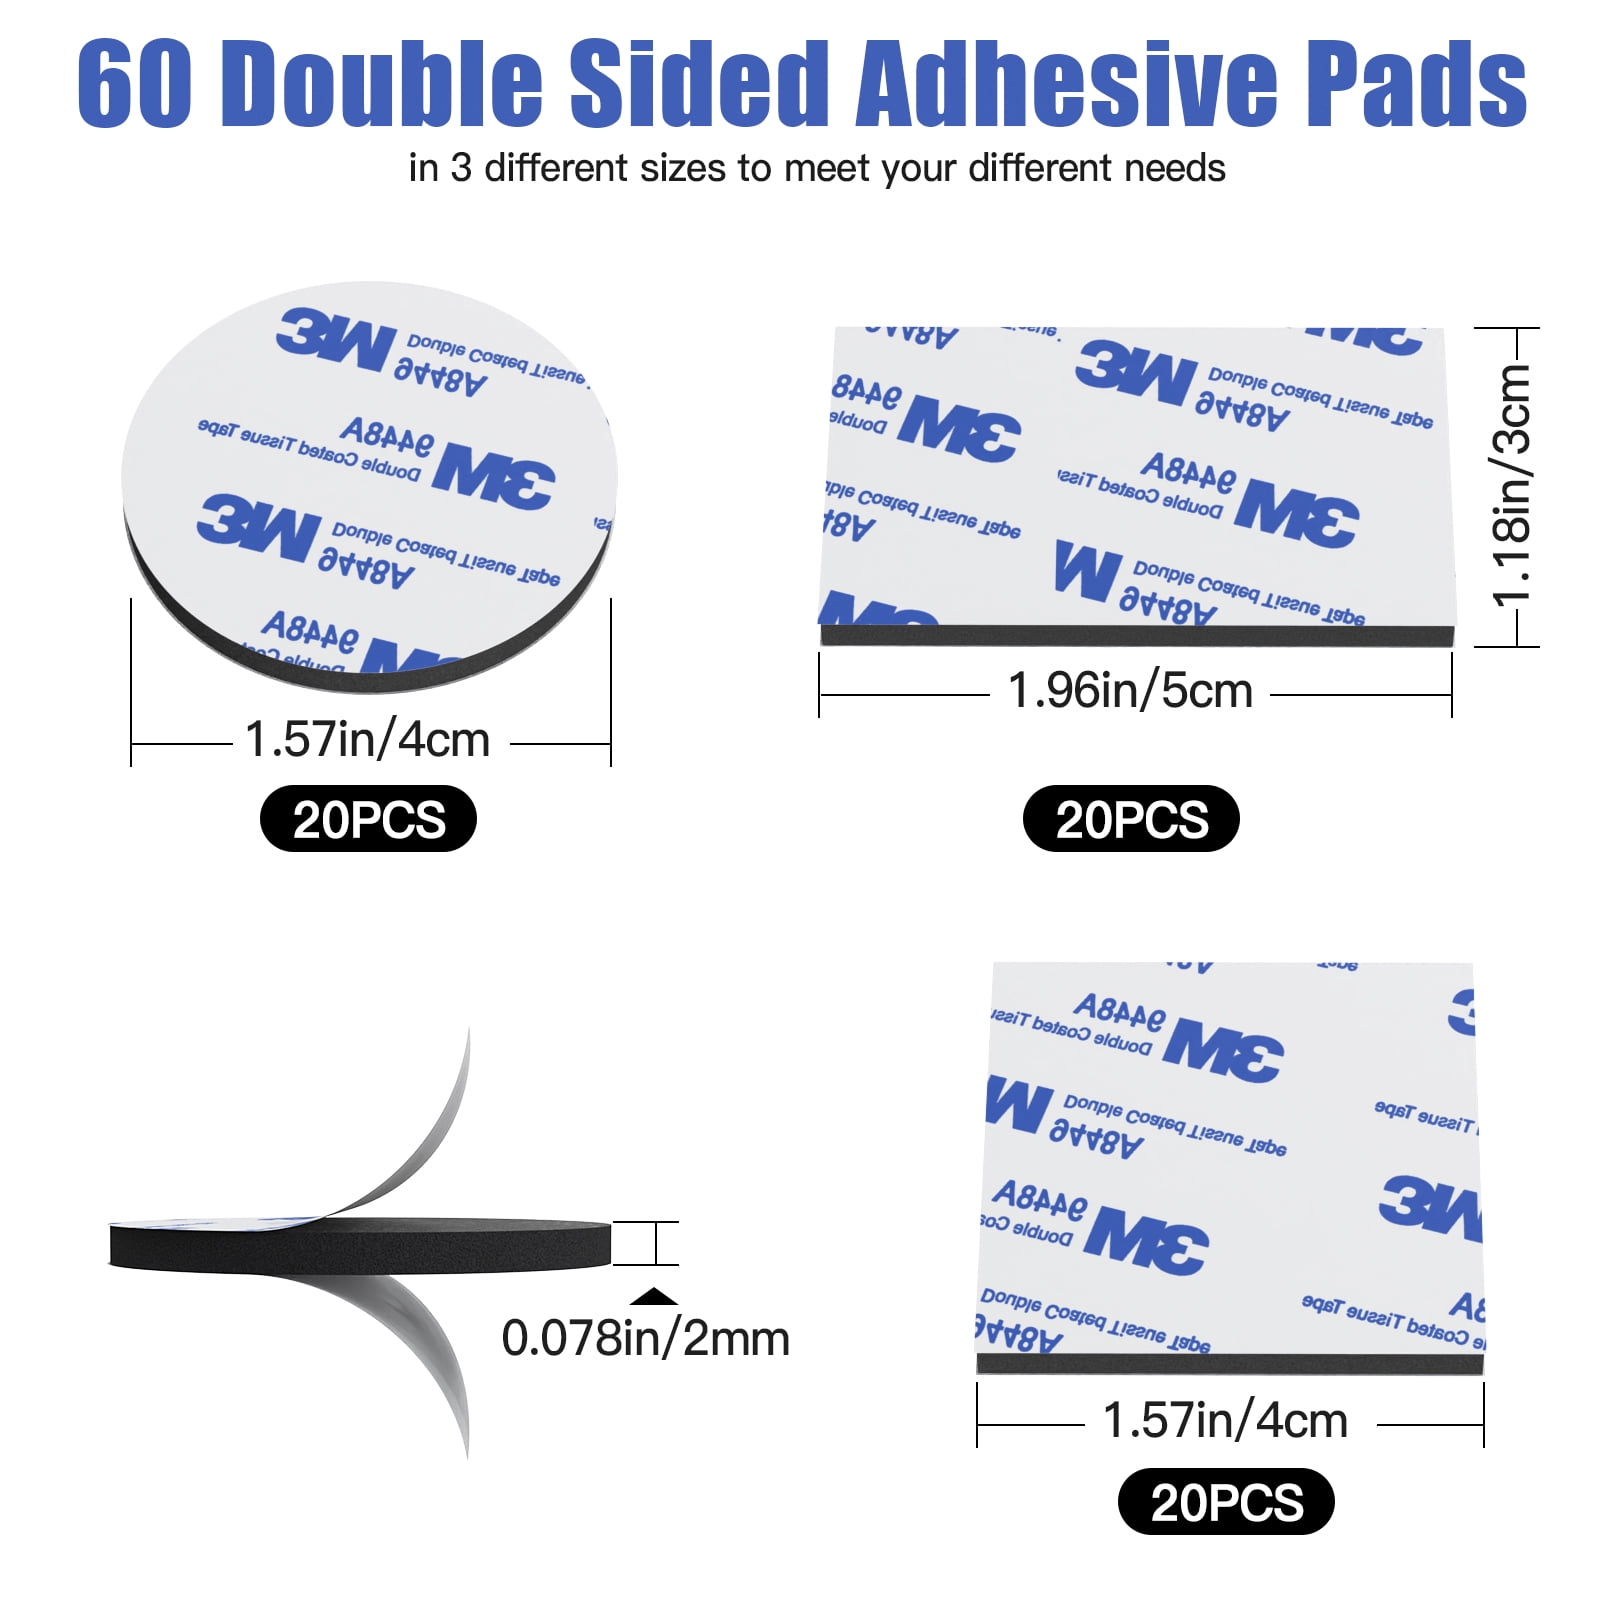 20pcs 3M EVA Foam Double Sided Adhesive Tape Pad Mounting Tape Round 35mm  Black